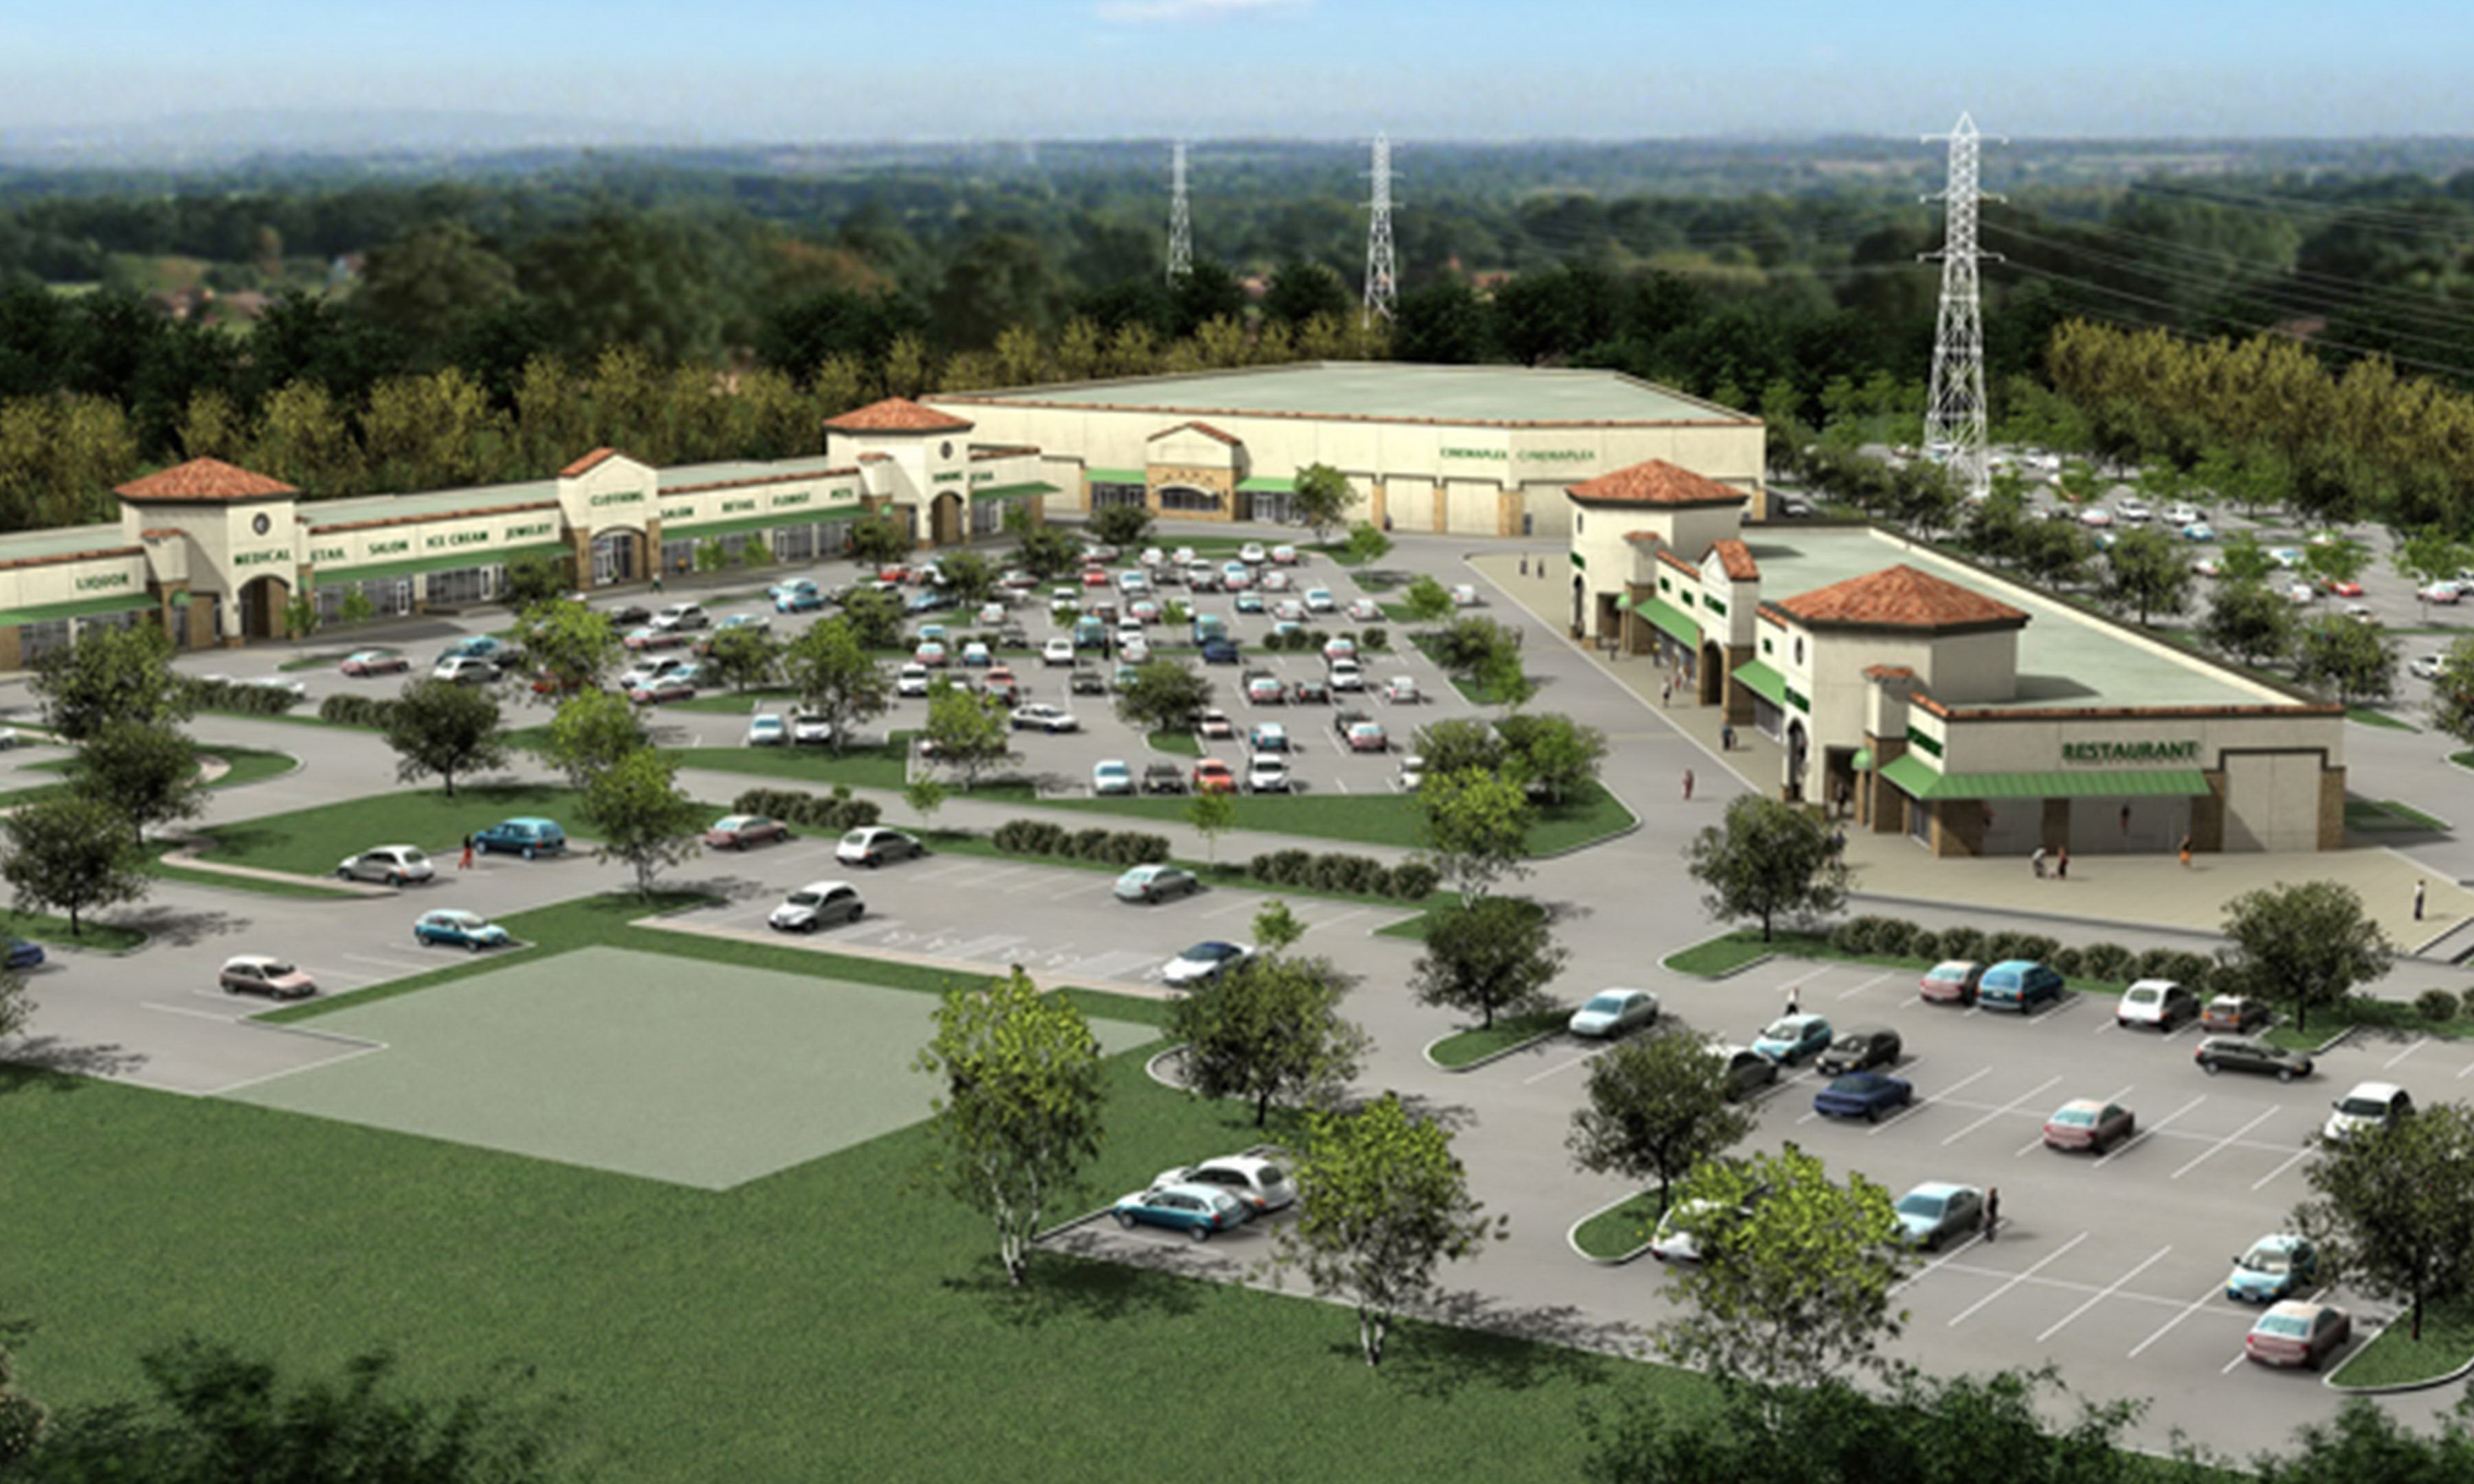 Highland Park Village Shopping Center site development and civil engineering